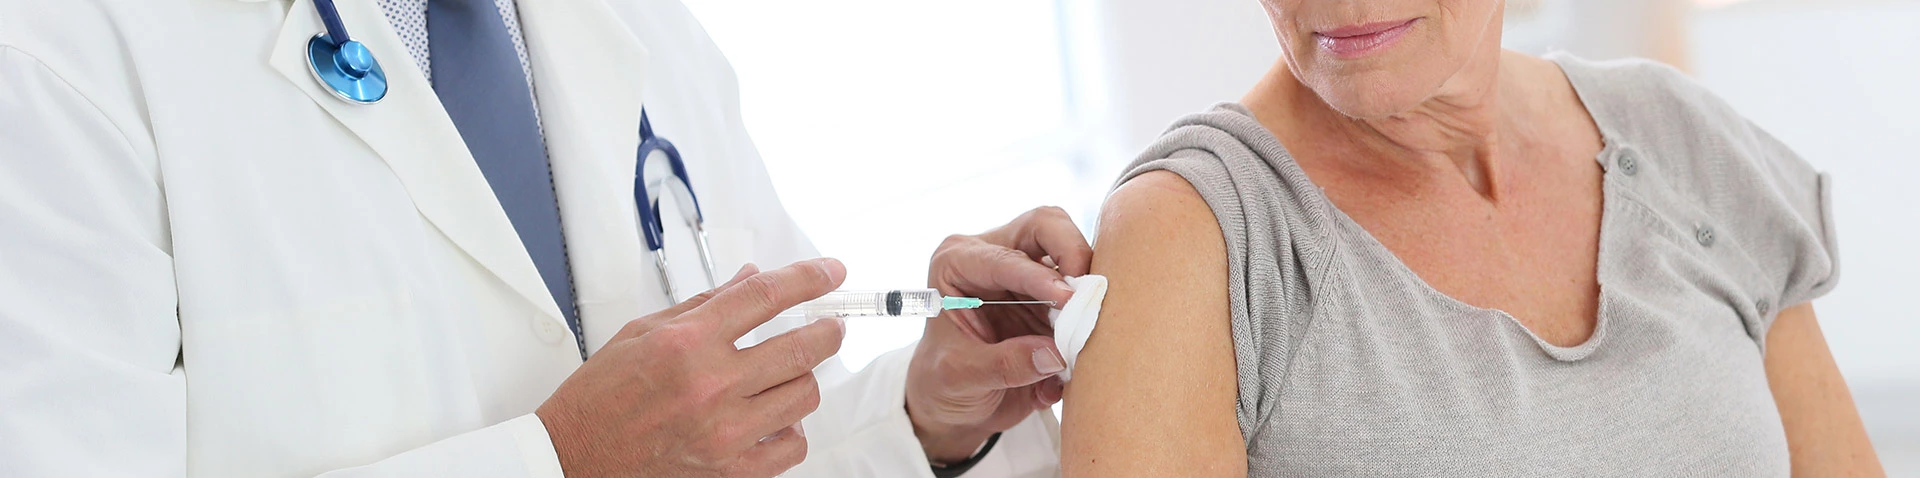 pharmacist giving a vaccine